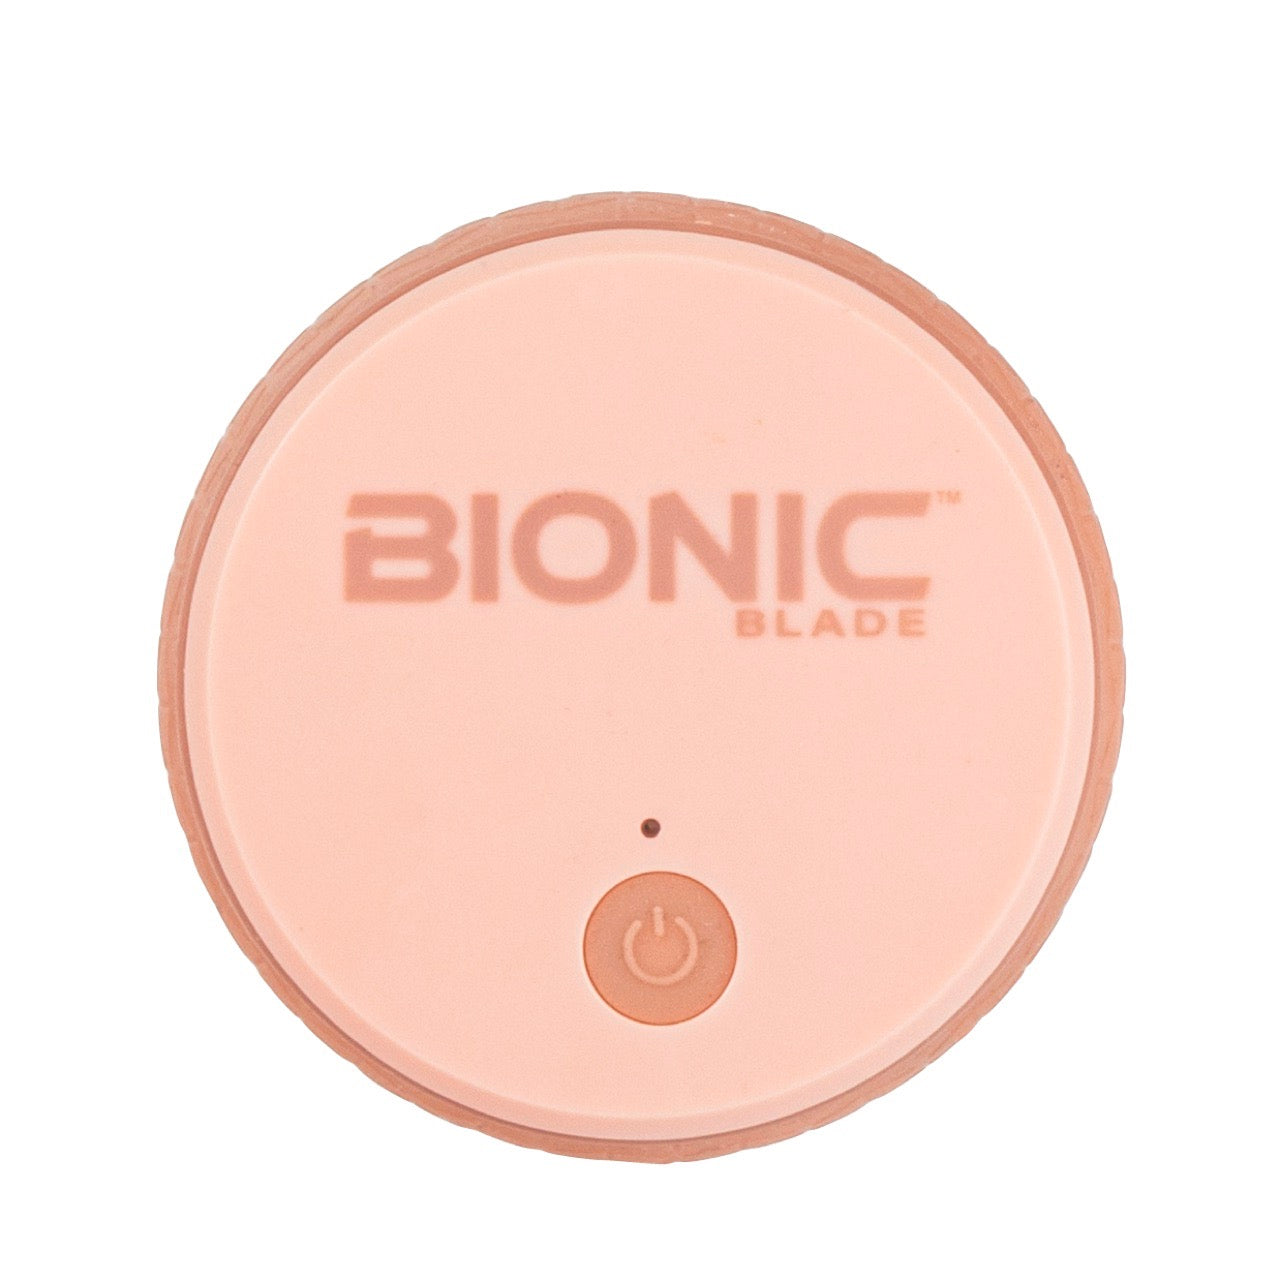 Bionic Blade Portable Blender - 18,000 RPM, USB Rechargeable Battery, Multiple Colors